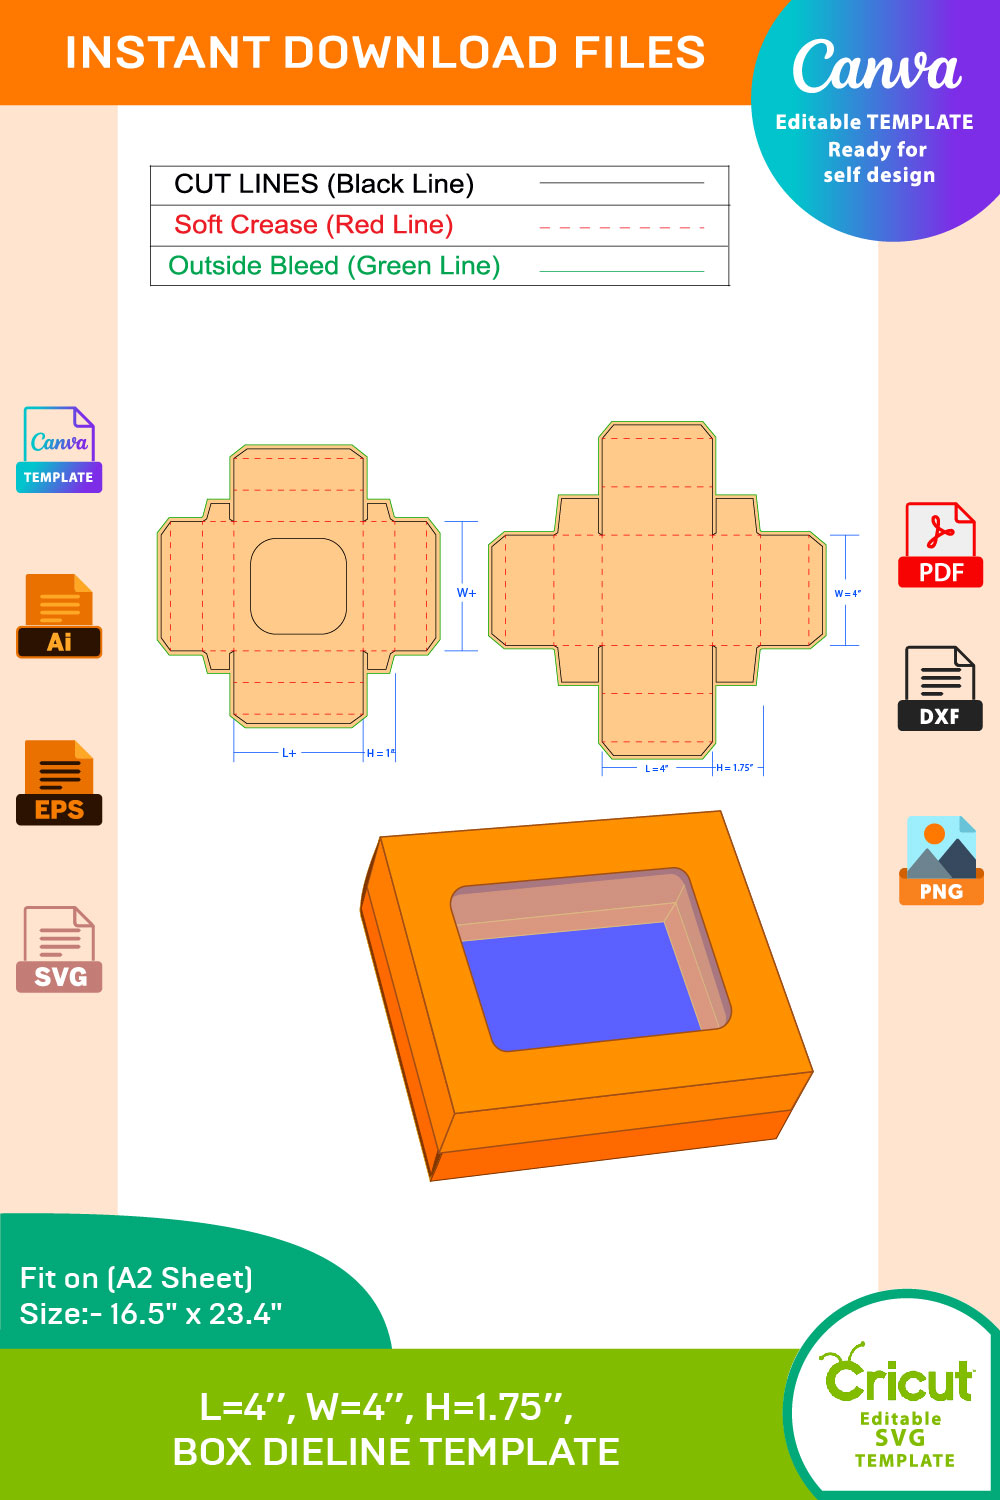 Cookie Box, Dieline Template, SVG, EPS, PDF, DXF, Ai, PNG, JPEG pinterest preview image.